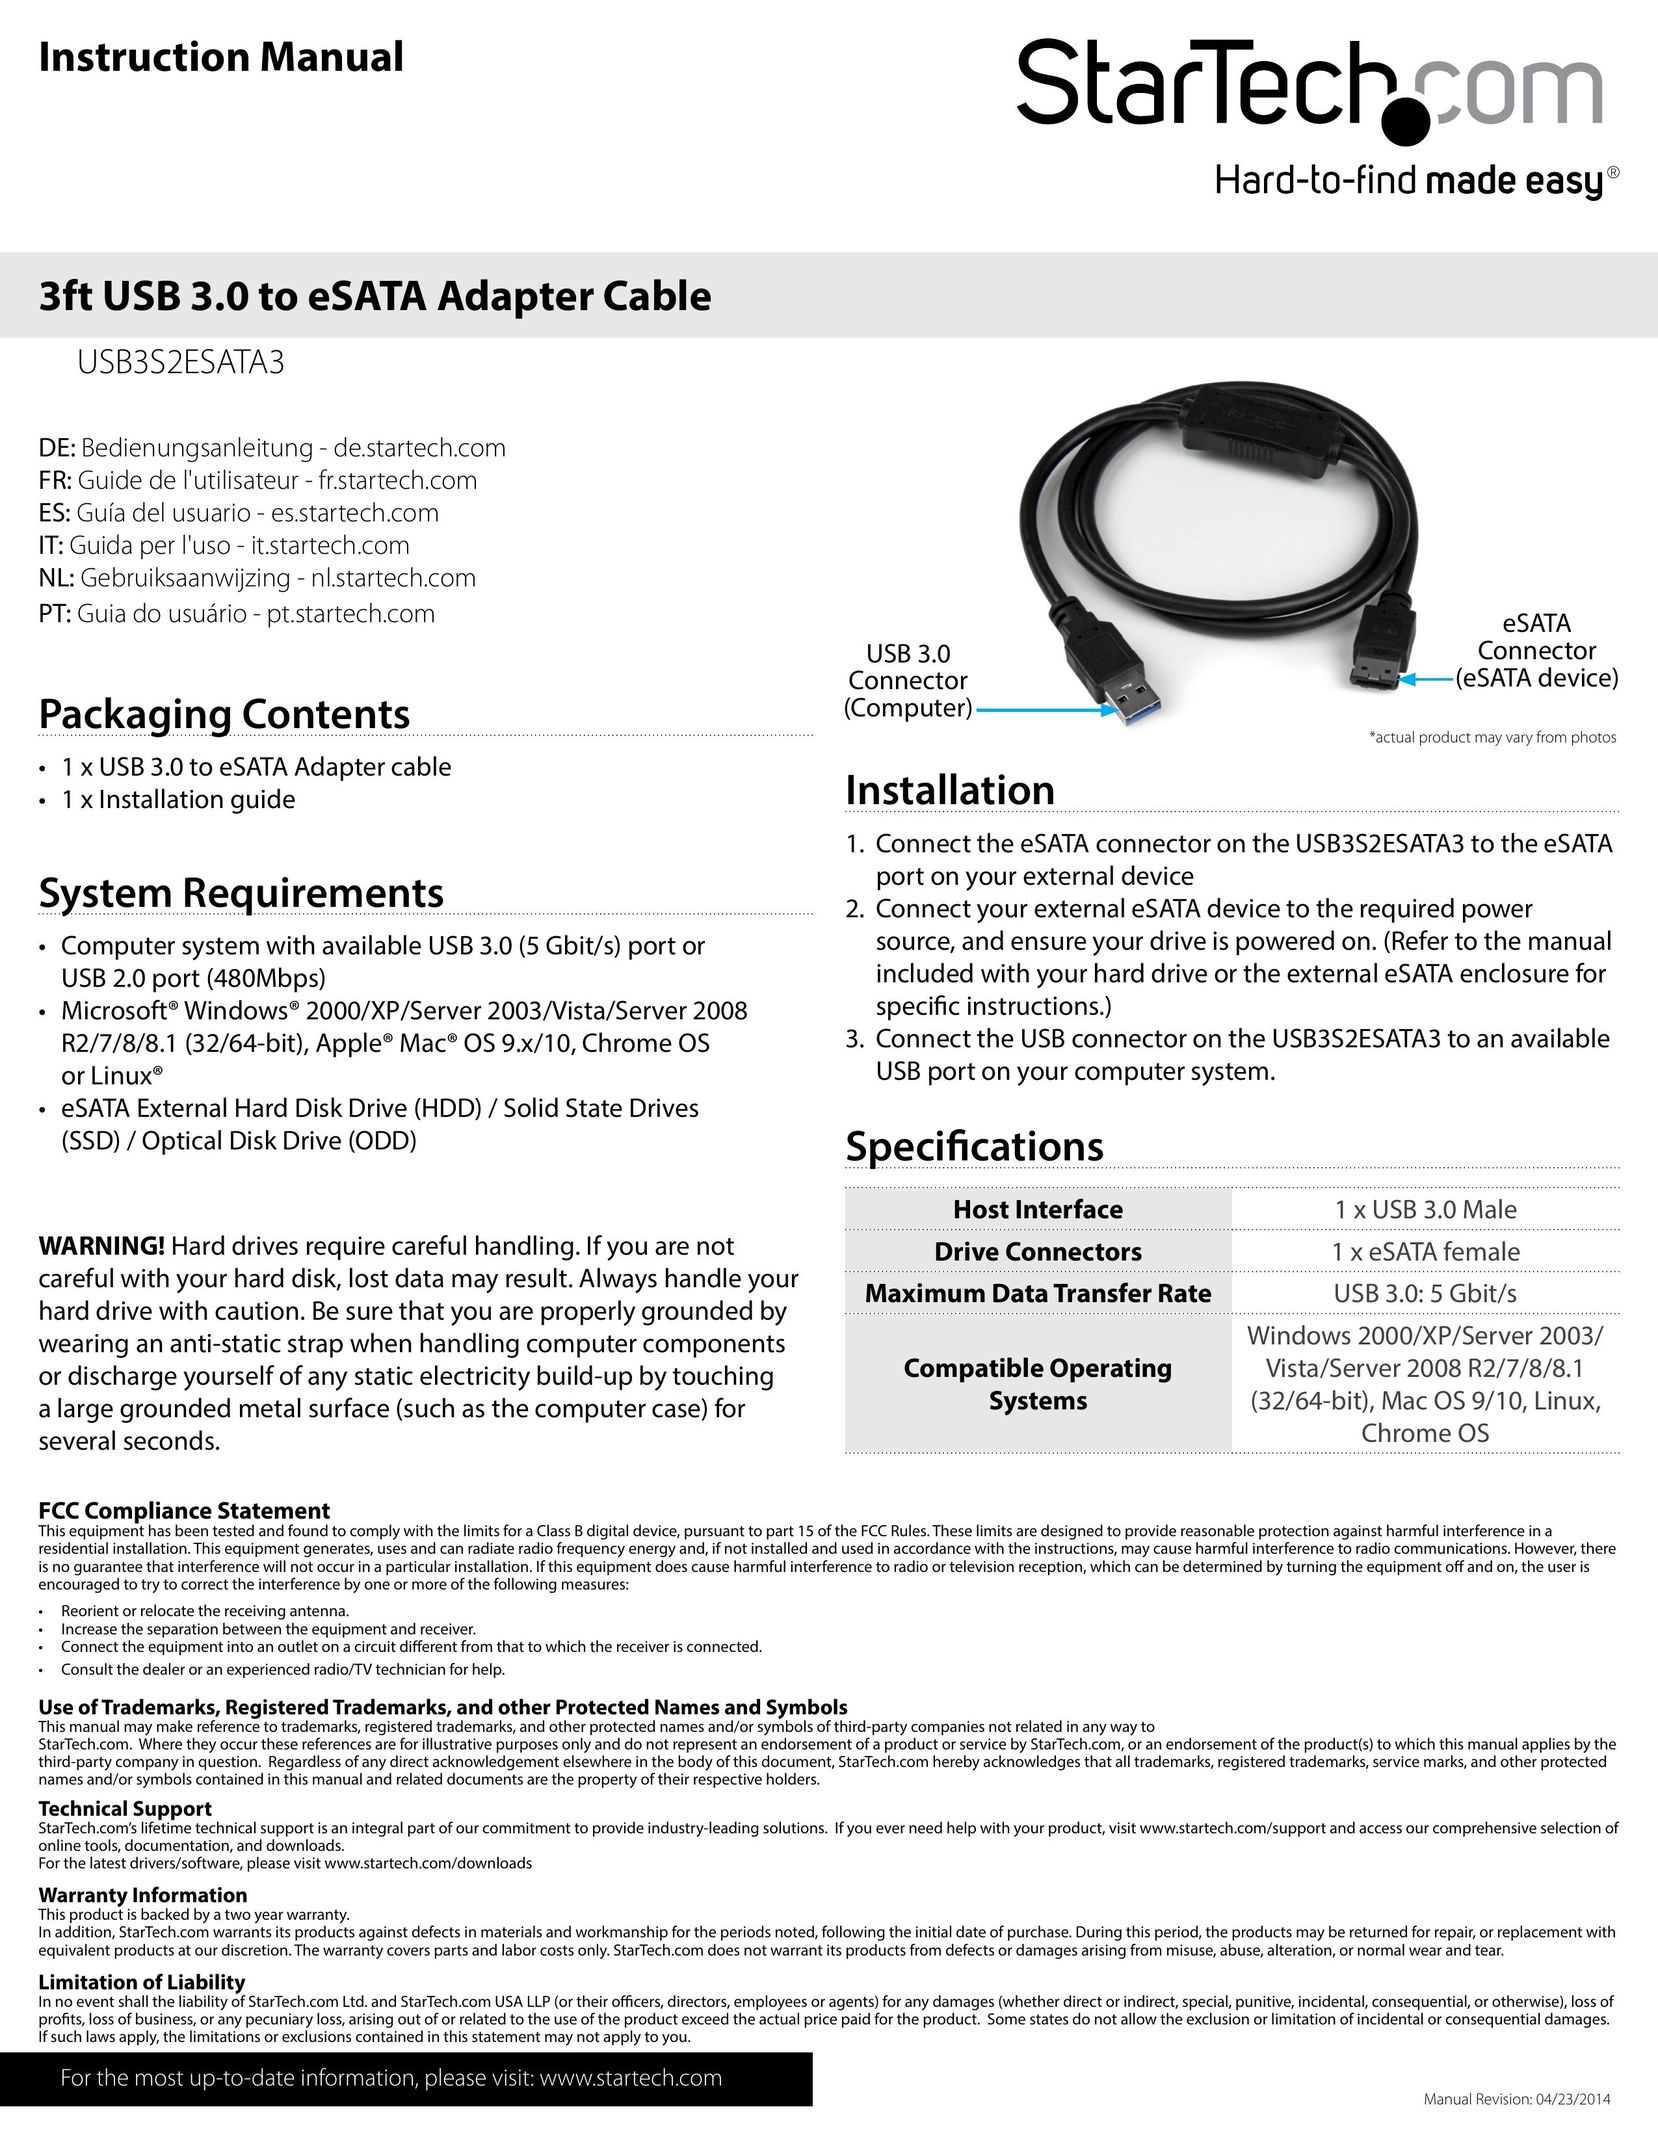 StarTech.com USB3S2ESATA3 Network Cables User Manual